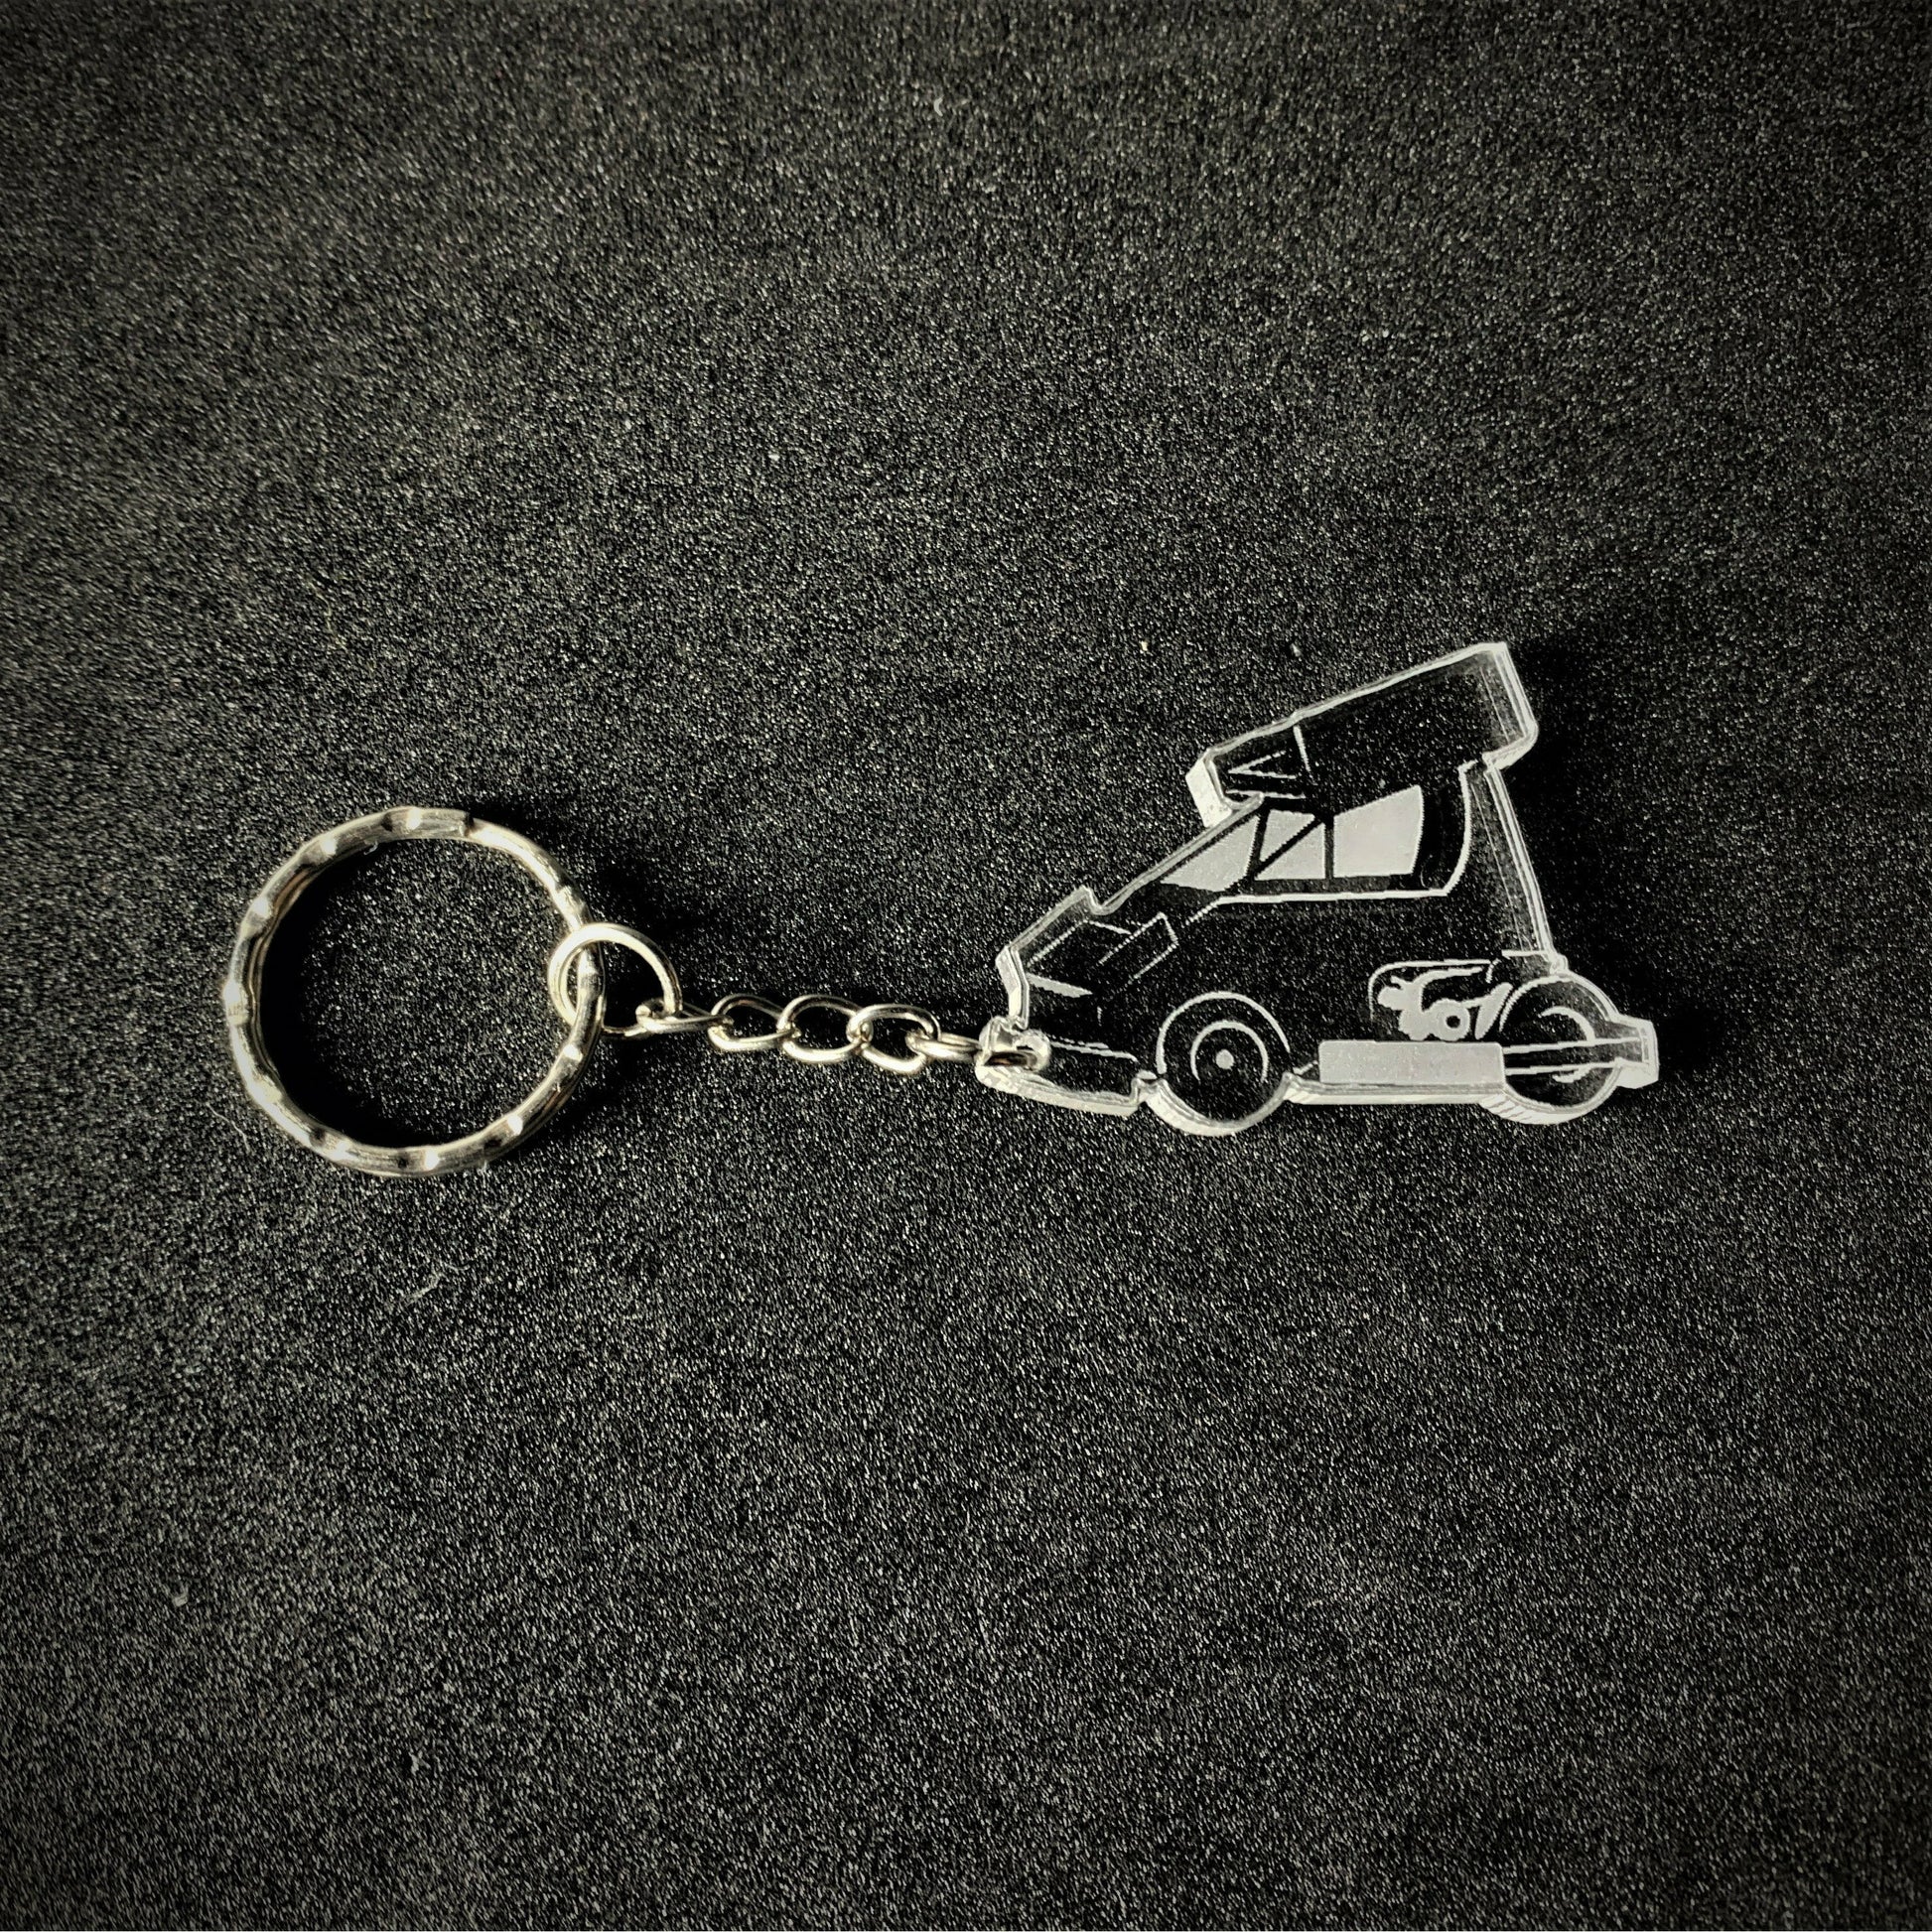 Stoxkart Keyring - Key Ring - Stock Car & Banger Toy Tracks